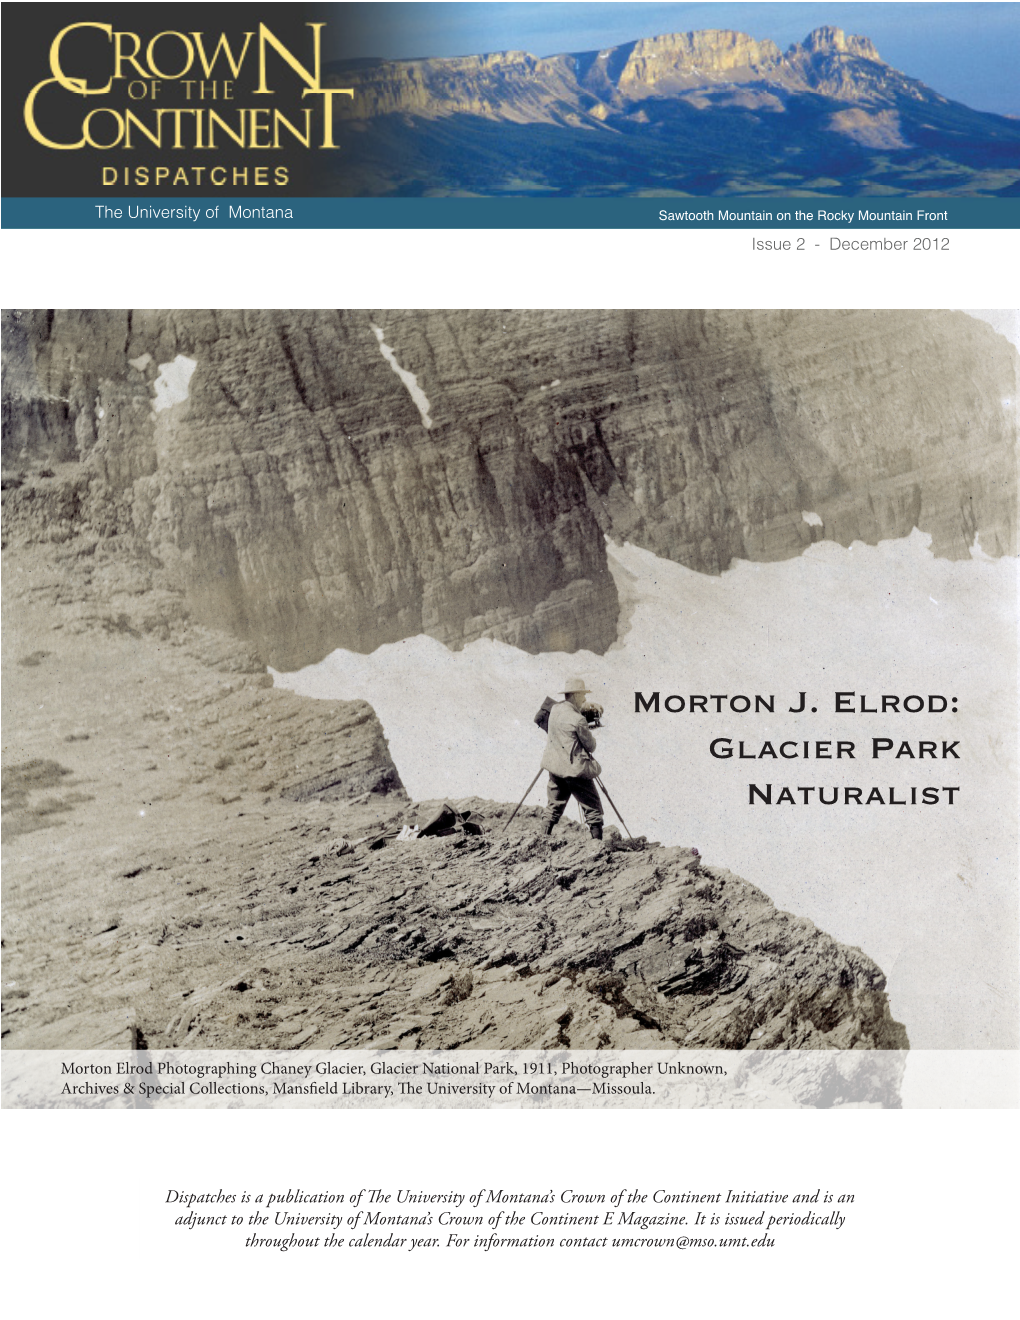 Morton J. Elrod: Glacier Park Naturalist